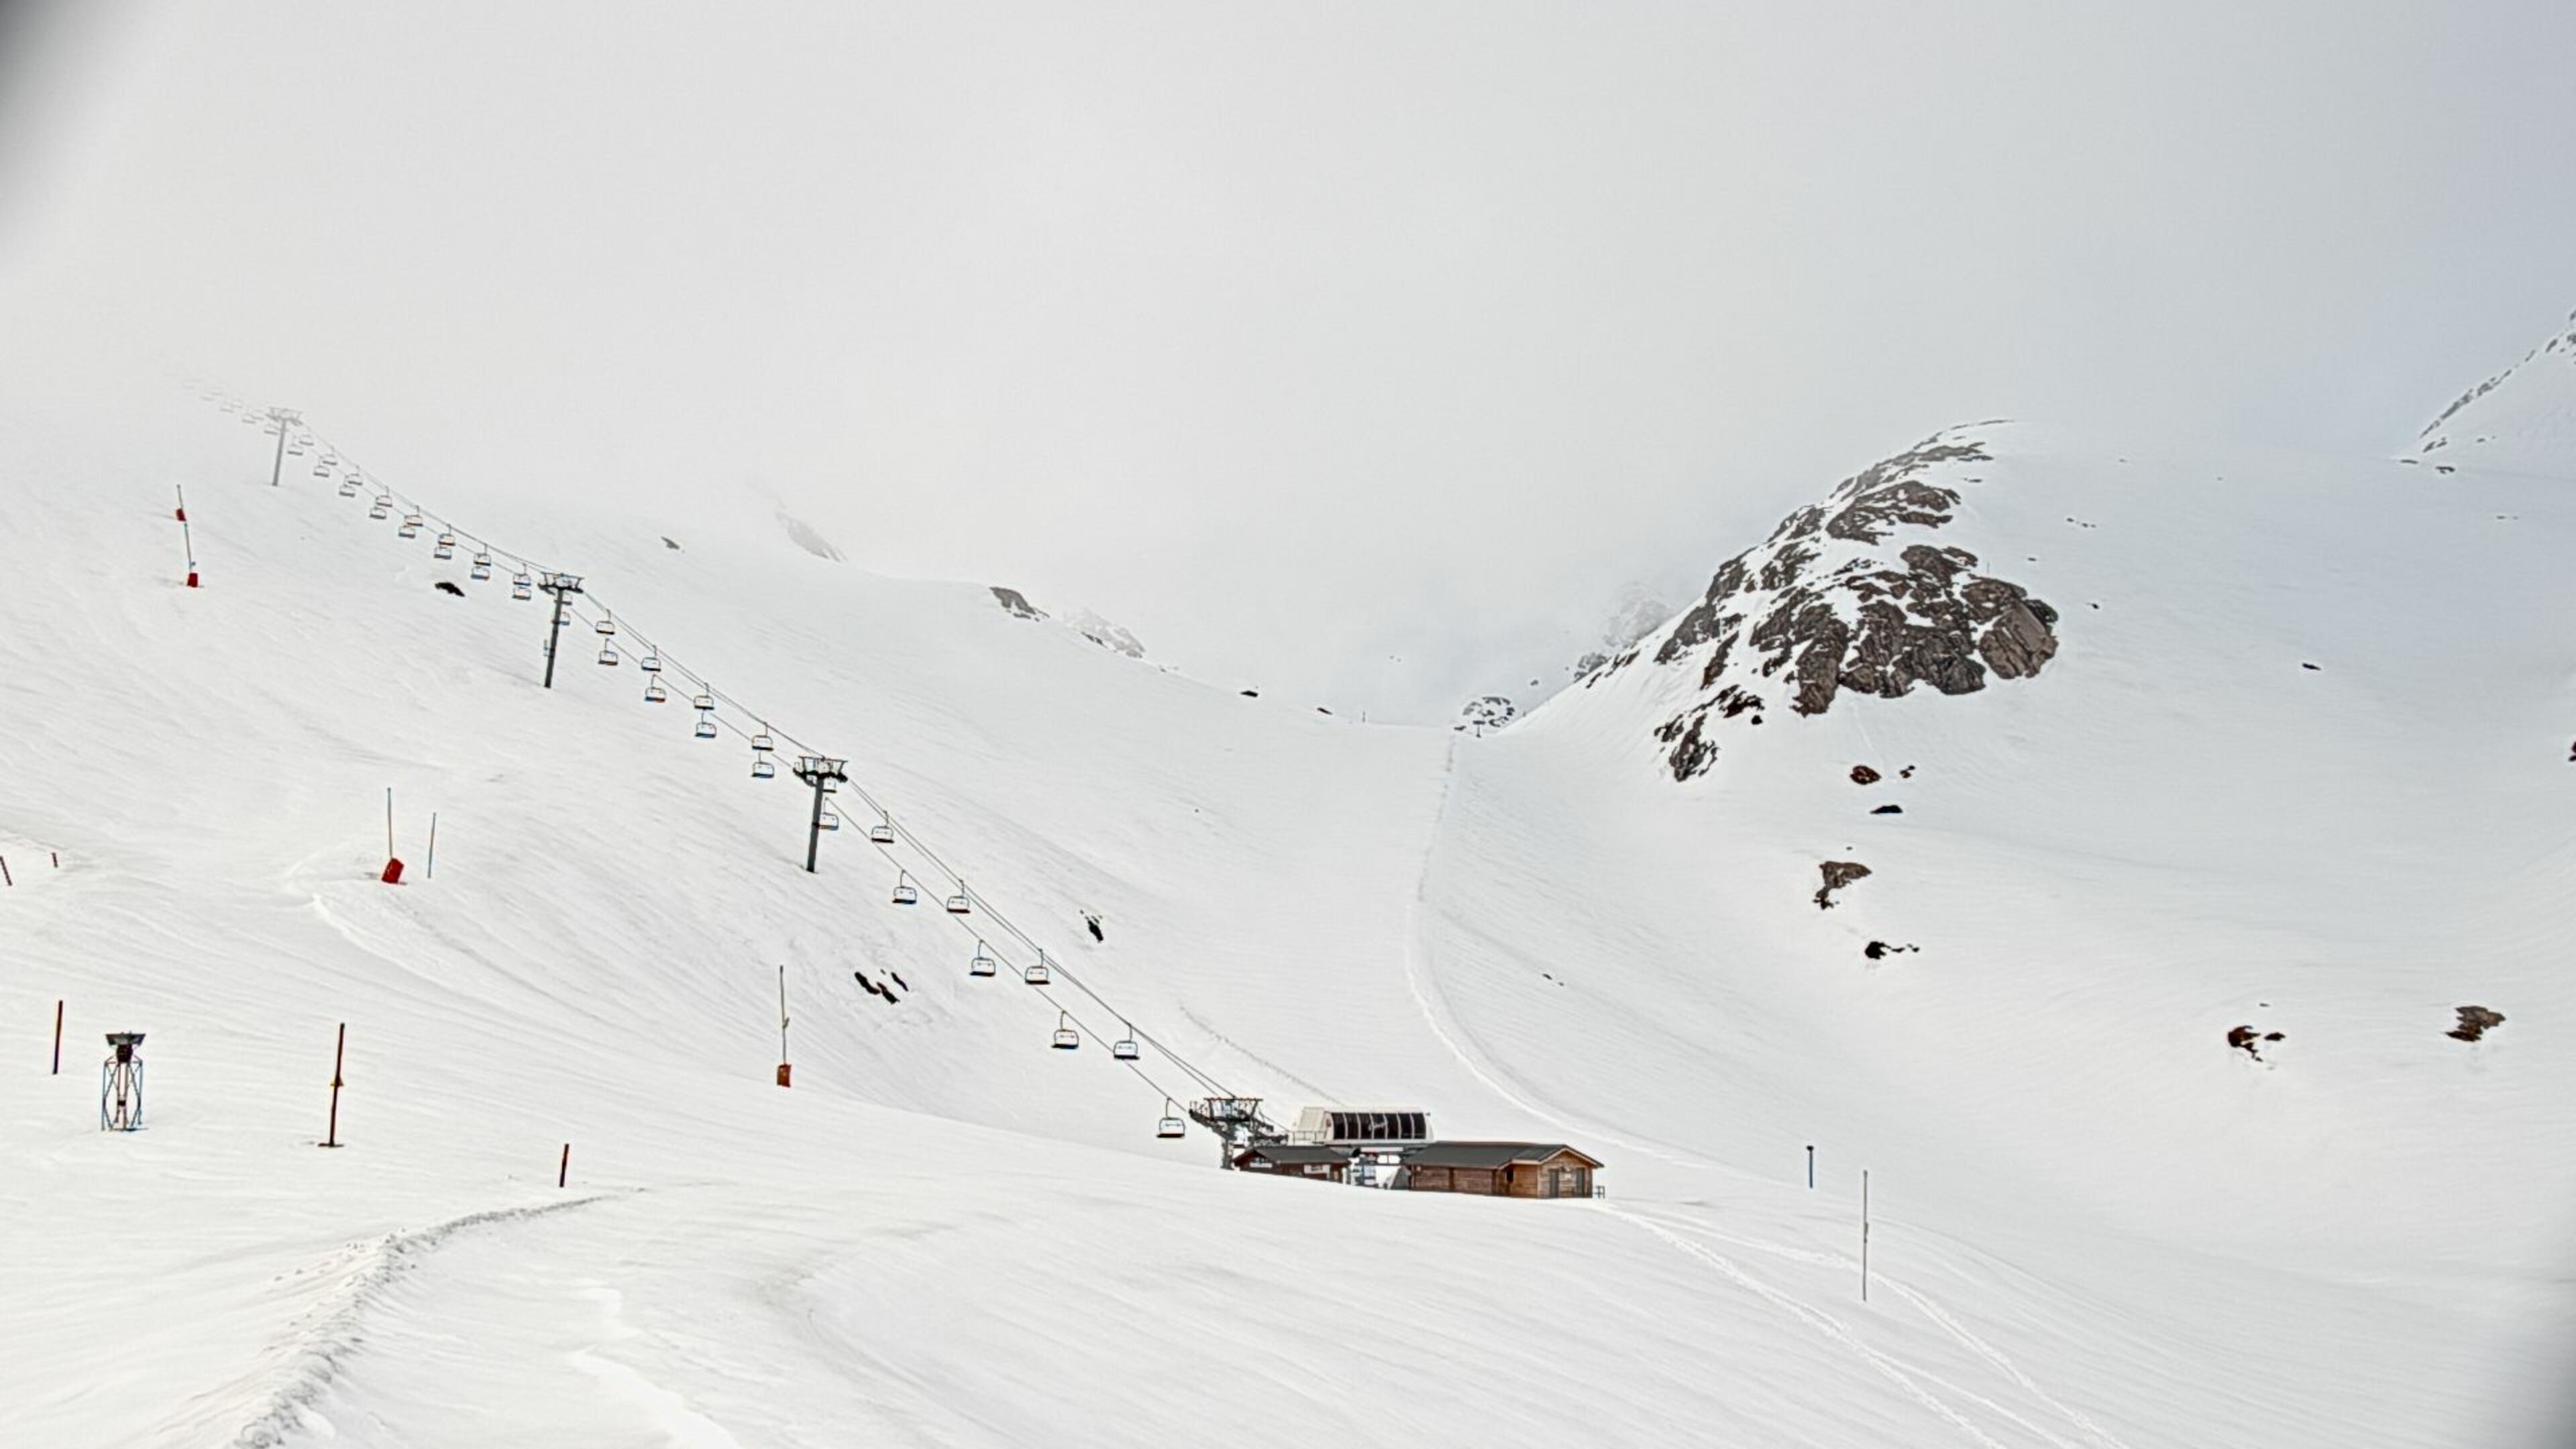 Alpe d'Huez web camera - Harpie ski station